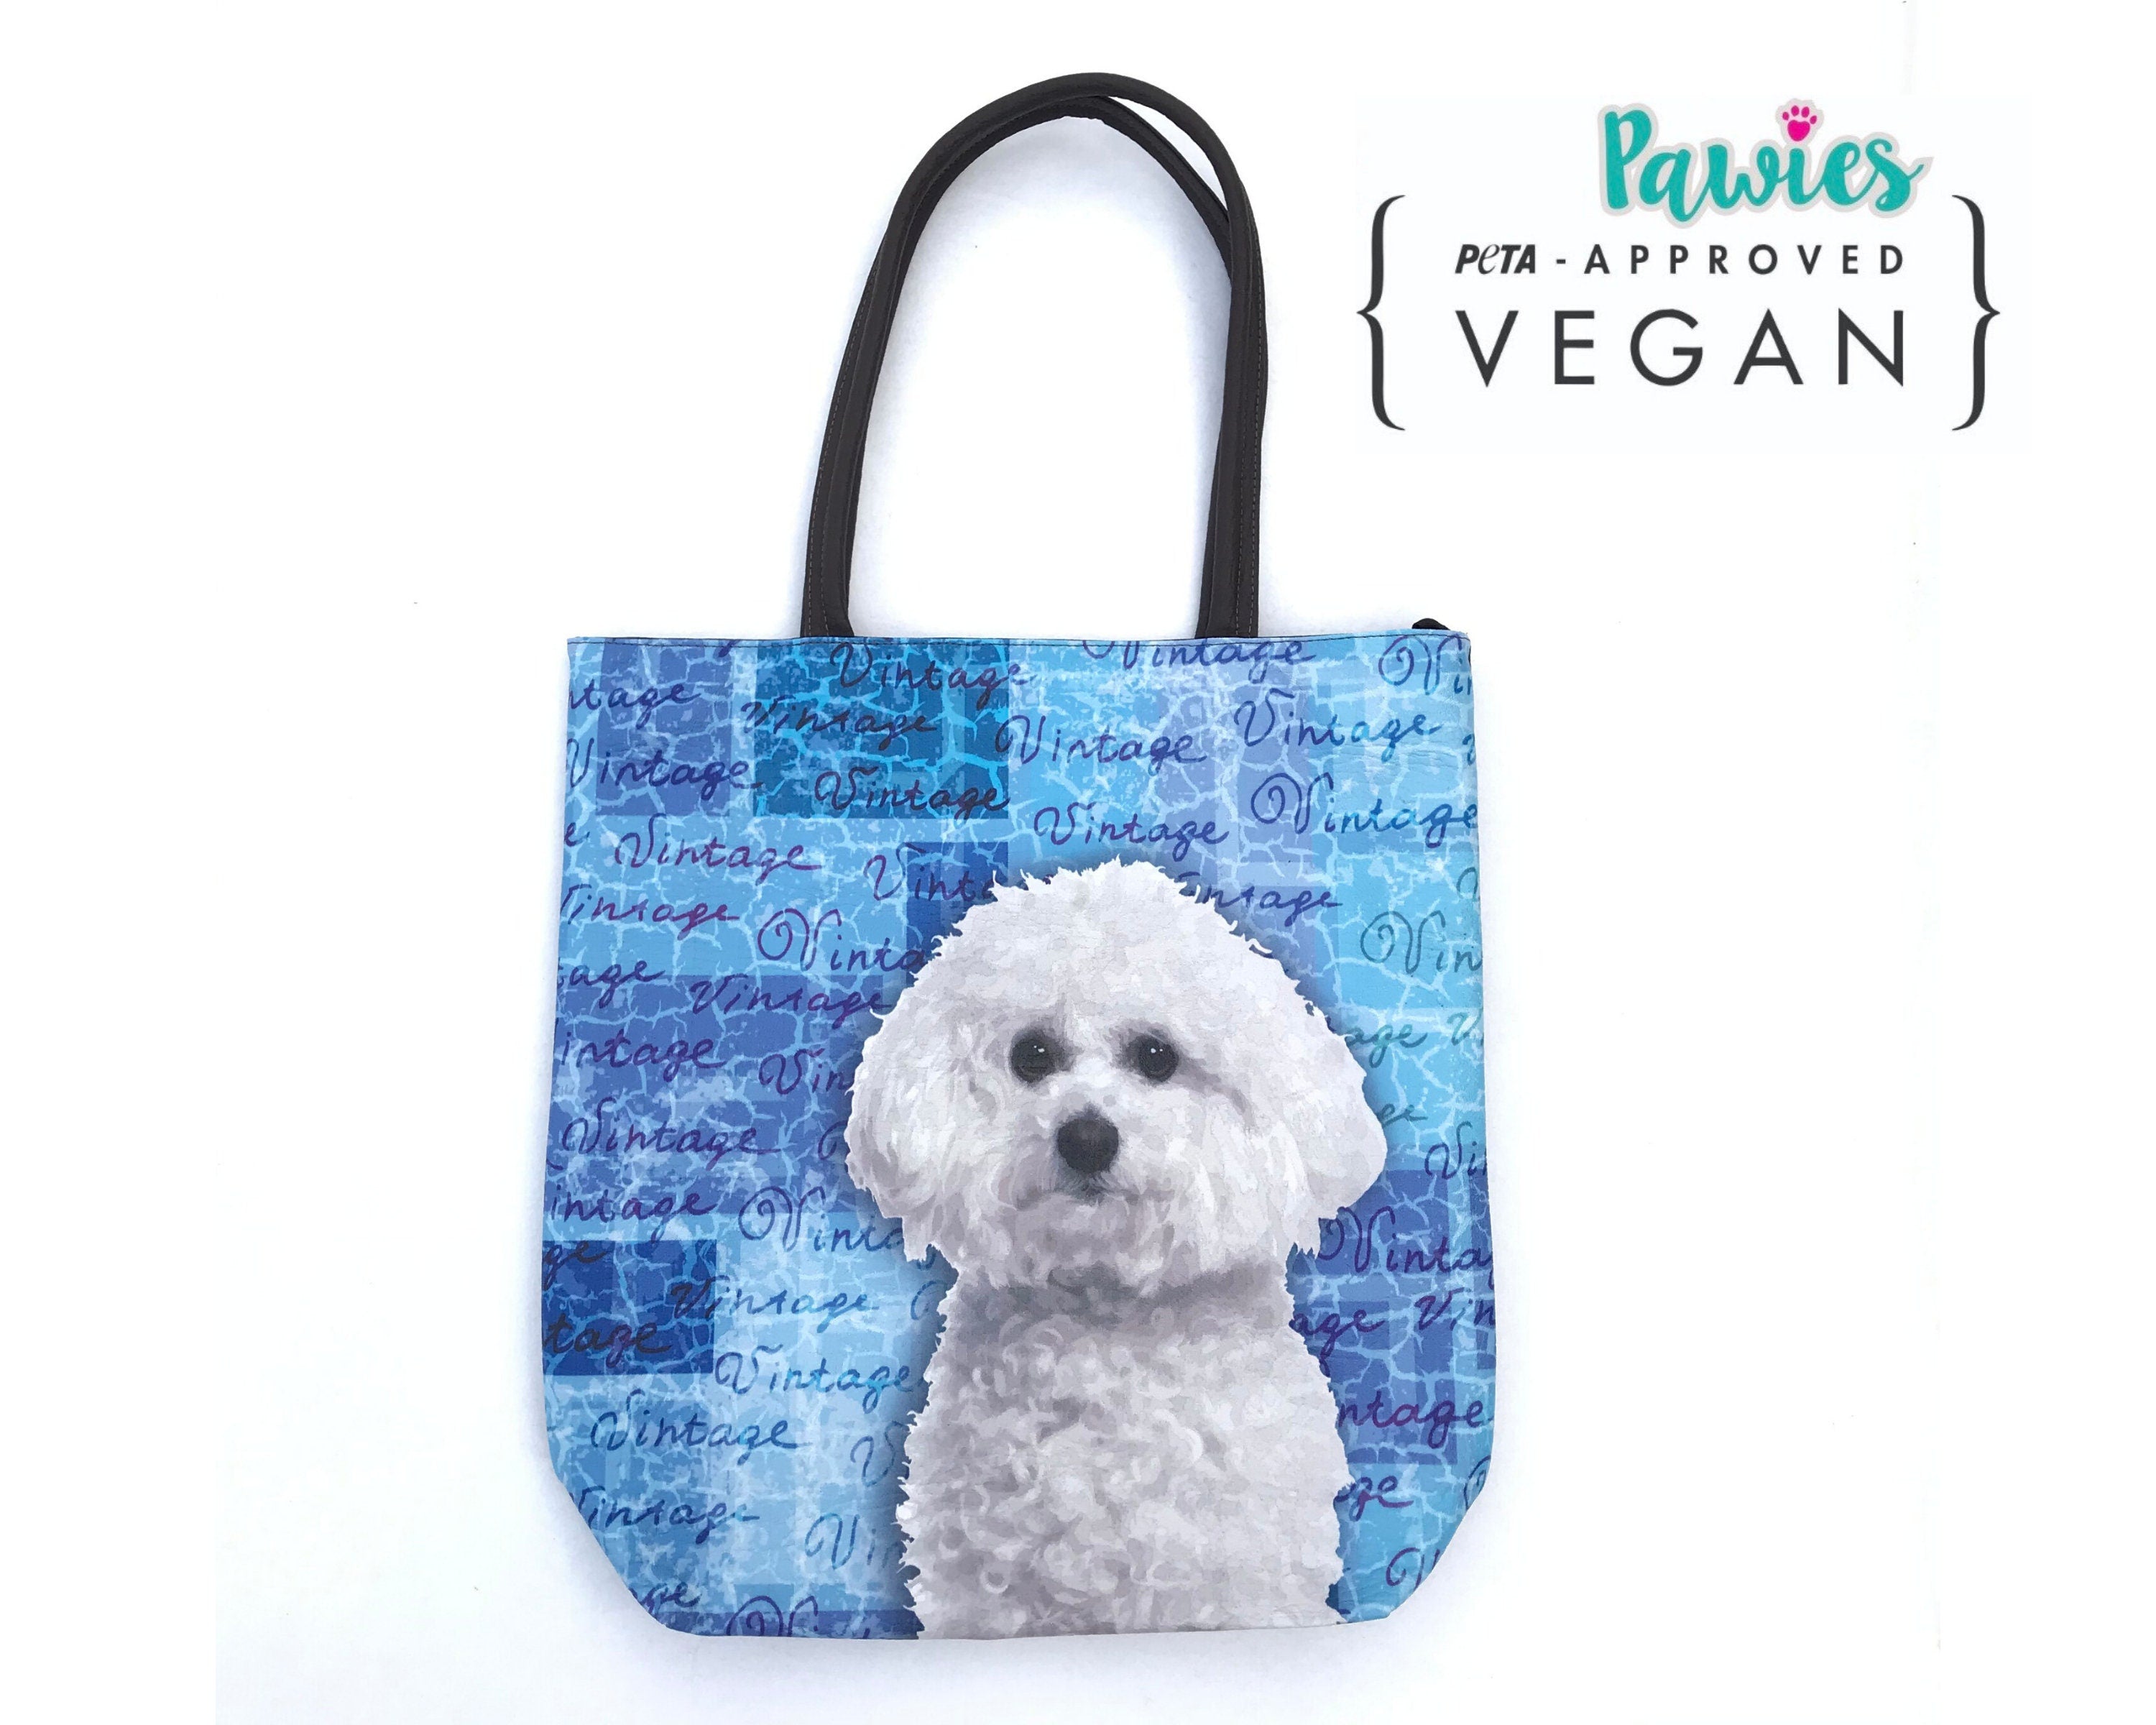 Bichon Frise Vegan Leather Tote bag, tote bag, animal lovers, dog lover, pawies, vegan leather